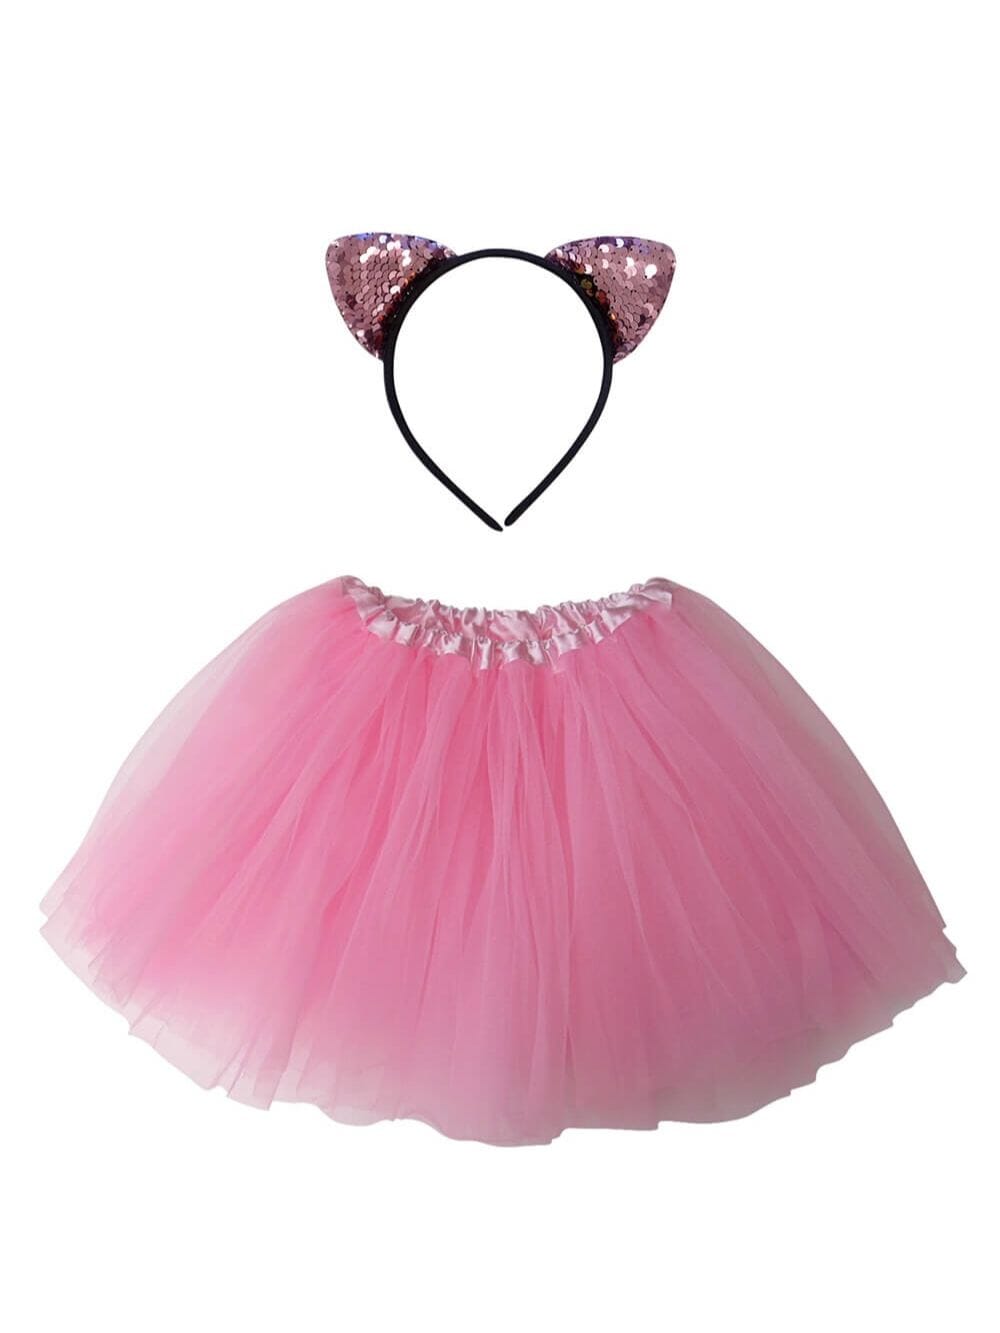 Adult Pink Cat Costume - Tutu Skirt & Flip Sequin Headband Set for Adult or Plus Size - Sydney So Sweet